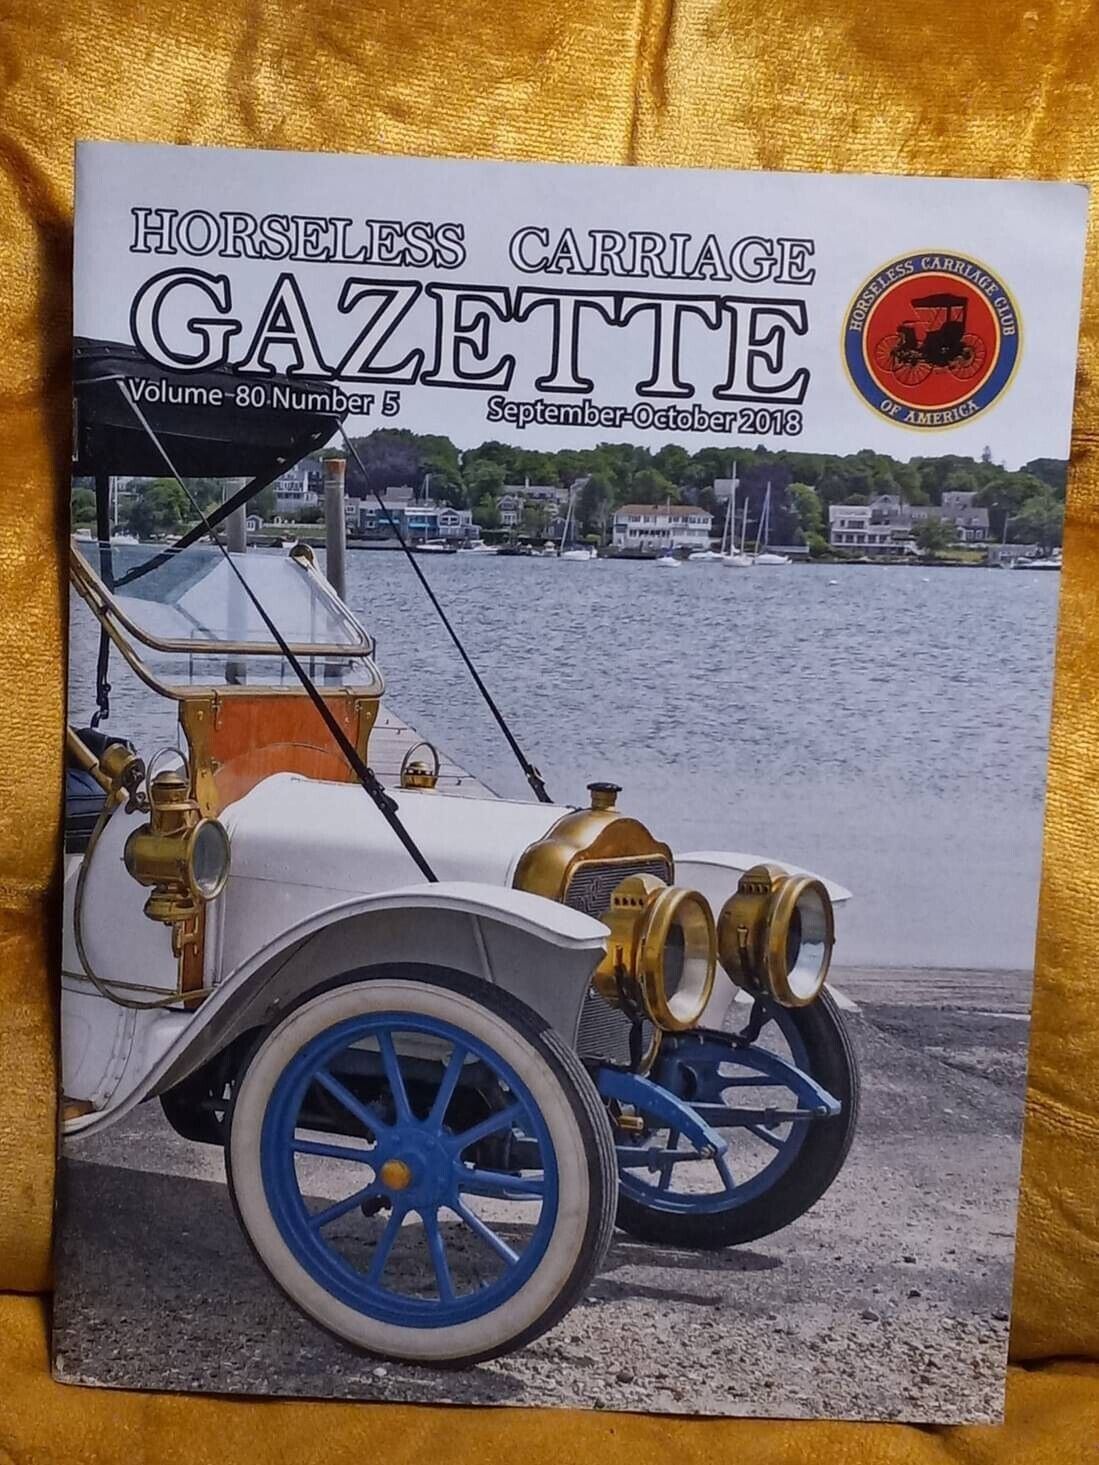 Horseless Carriage Gazette September/October 2018, vol 80, #5